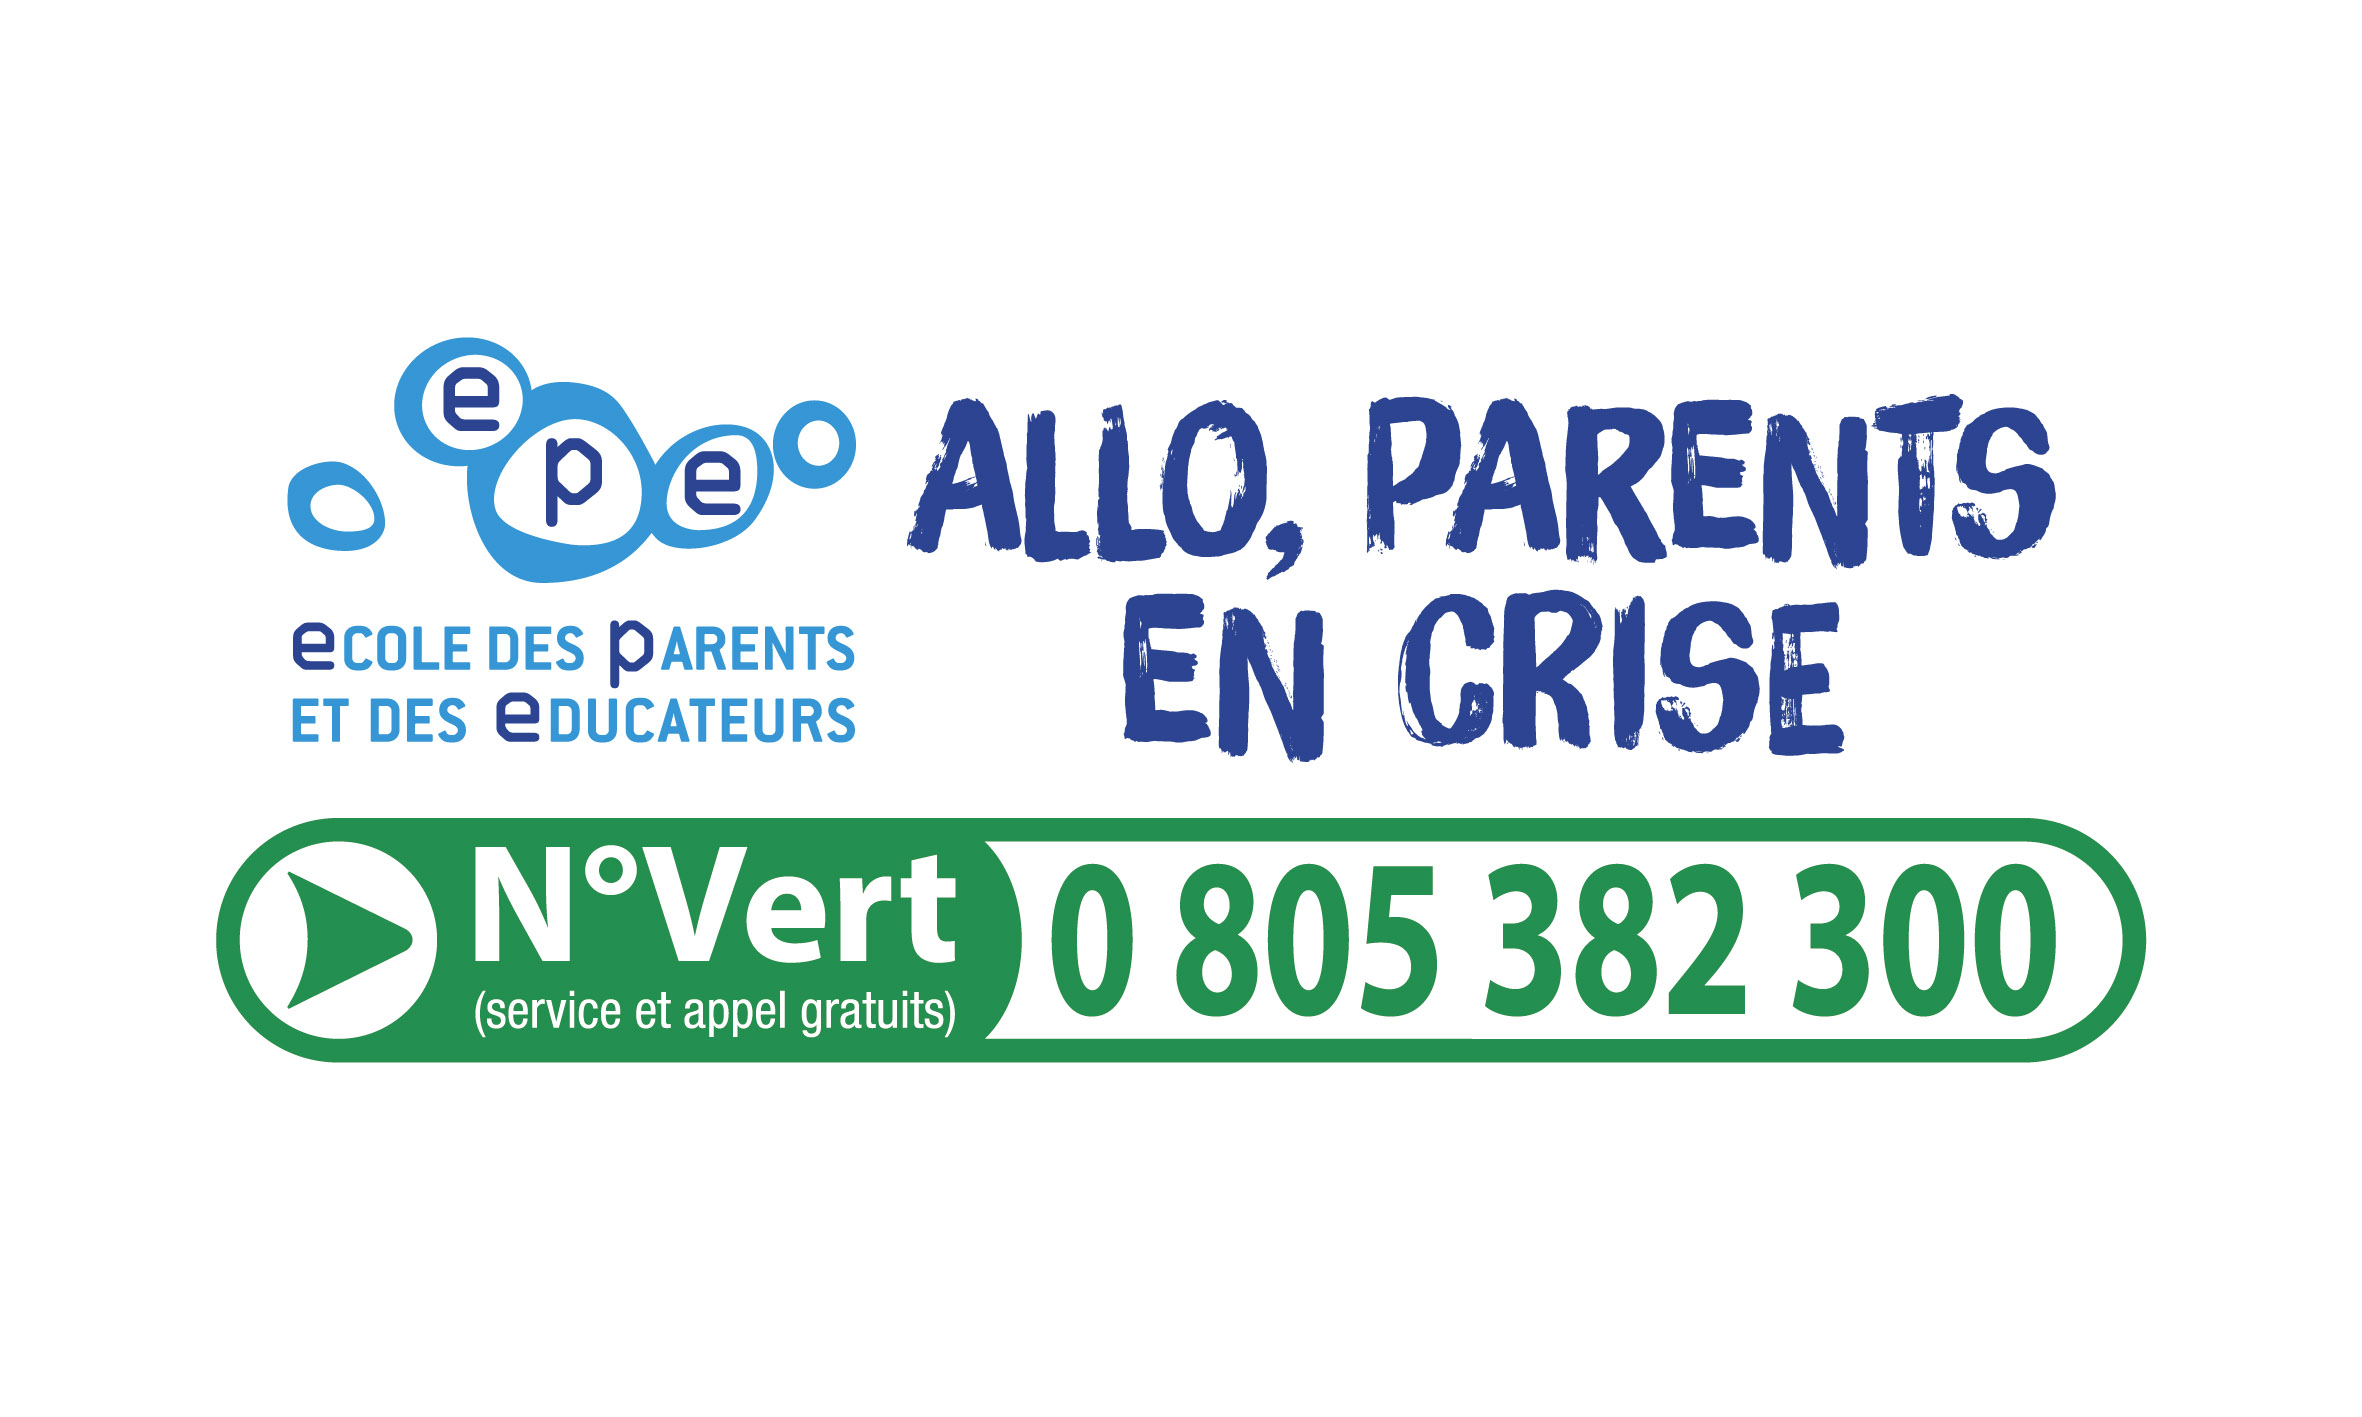 PICTO-N_Vert_Allo-Parents-en-crise.jpg